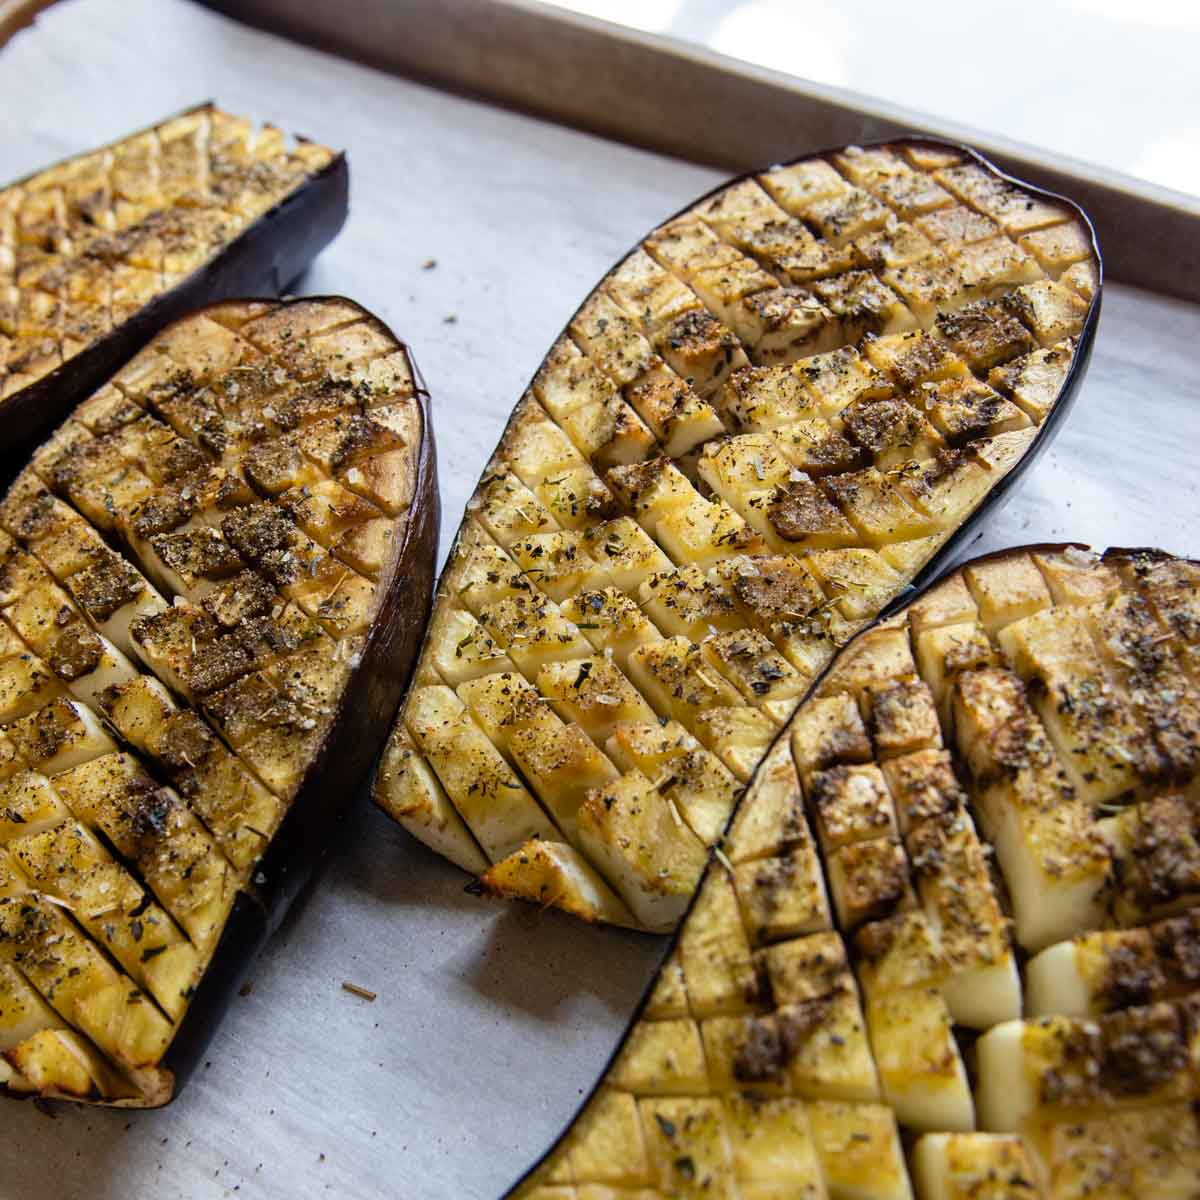 baked eggplant halves without stuffing.